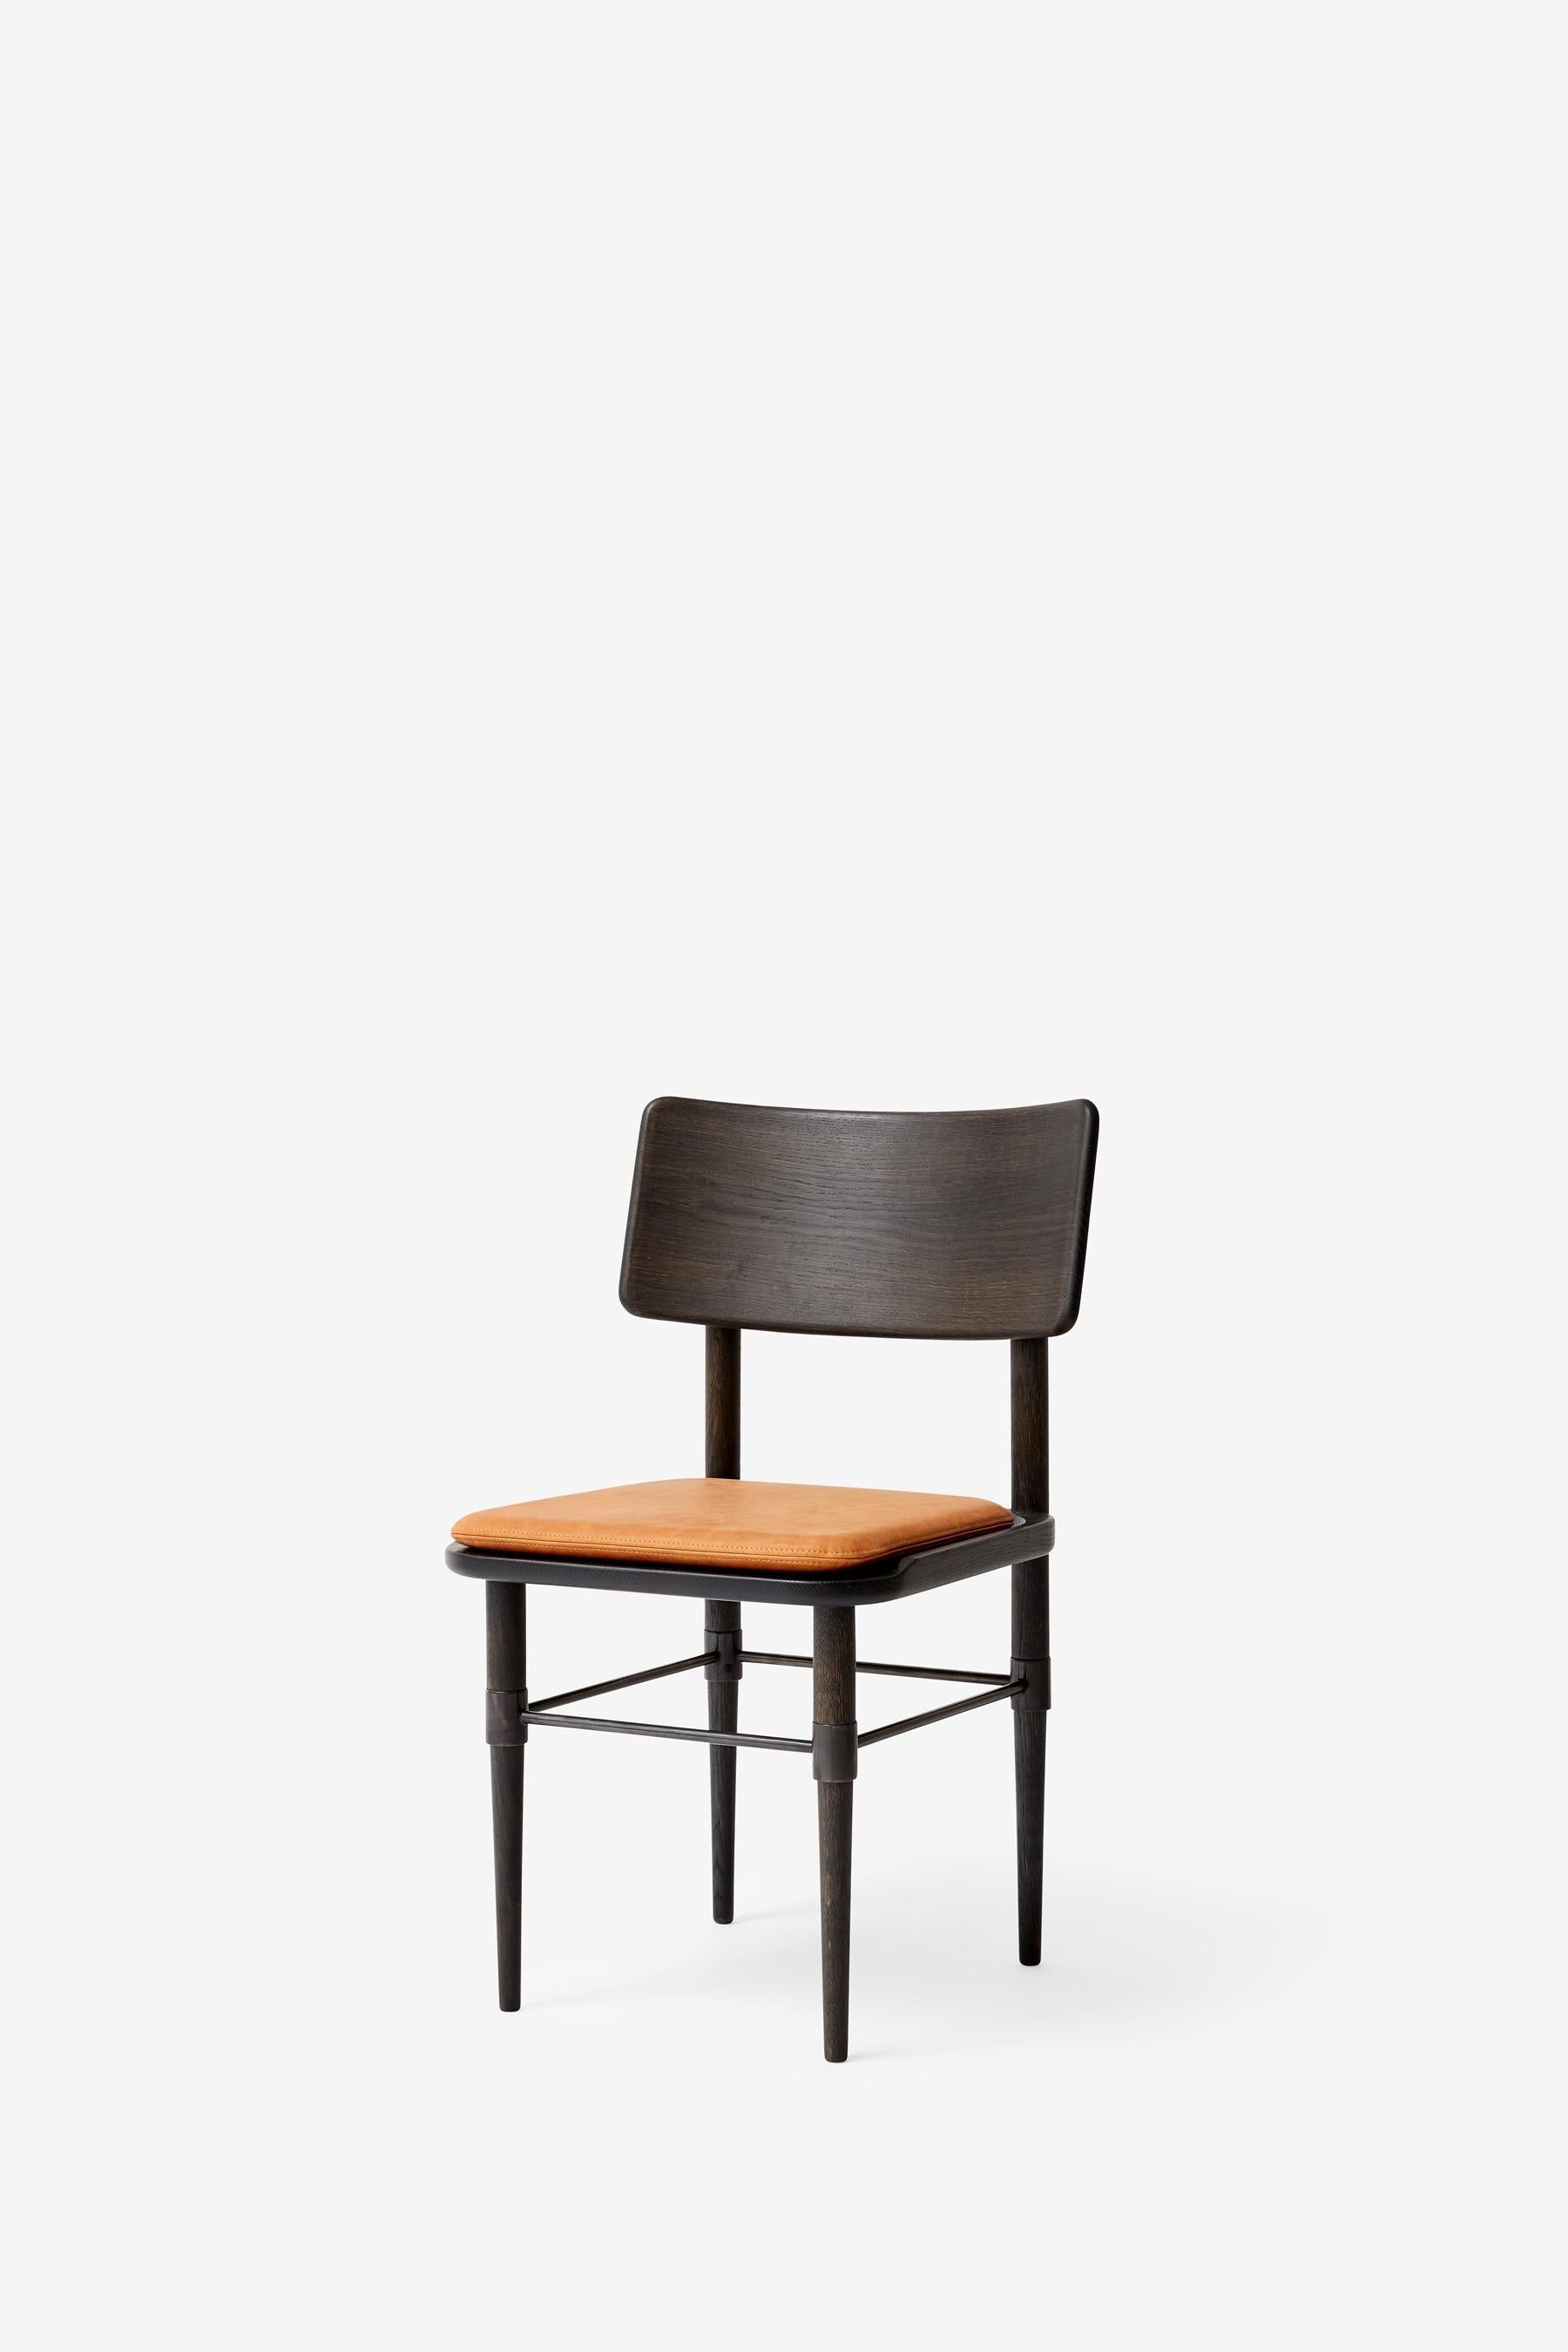 MG101 Dining chair in dark oak by Malte Gormsen Design by Space Copenhagen For Sale 4